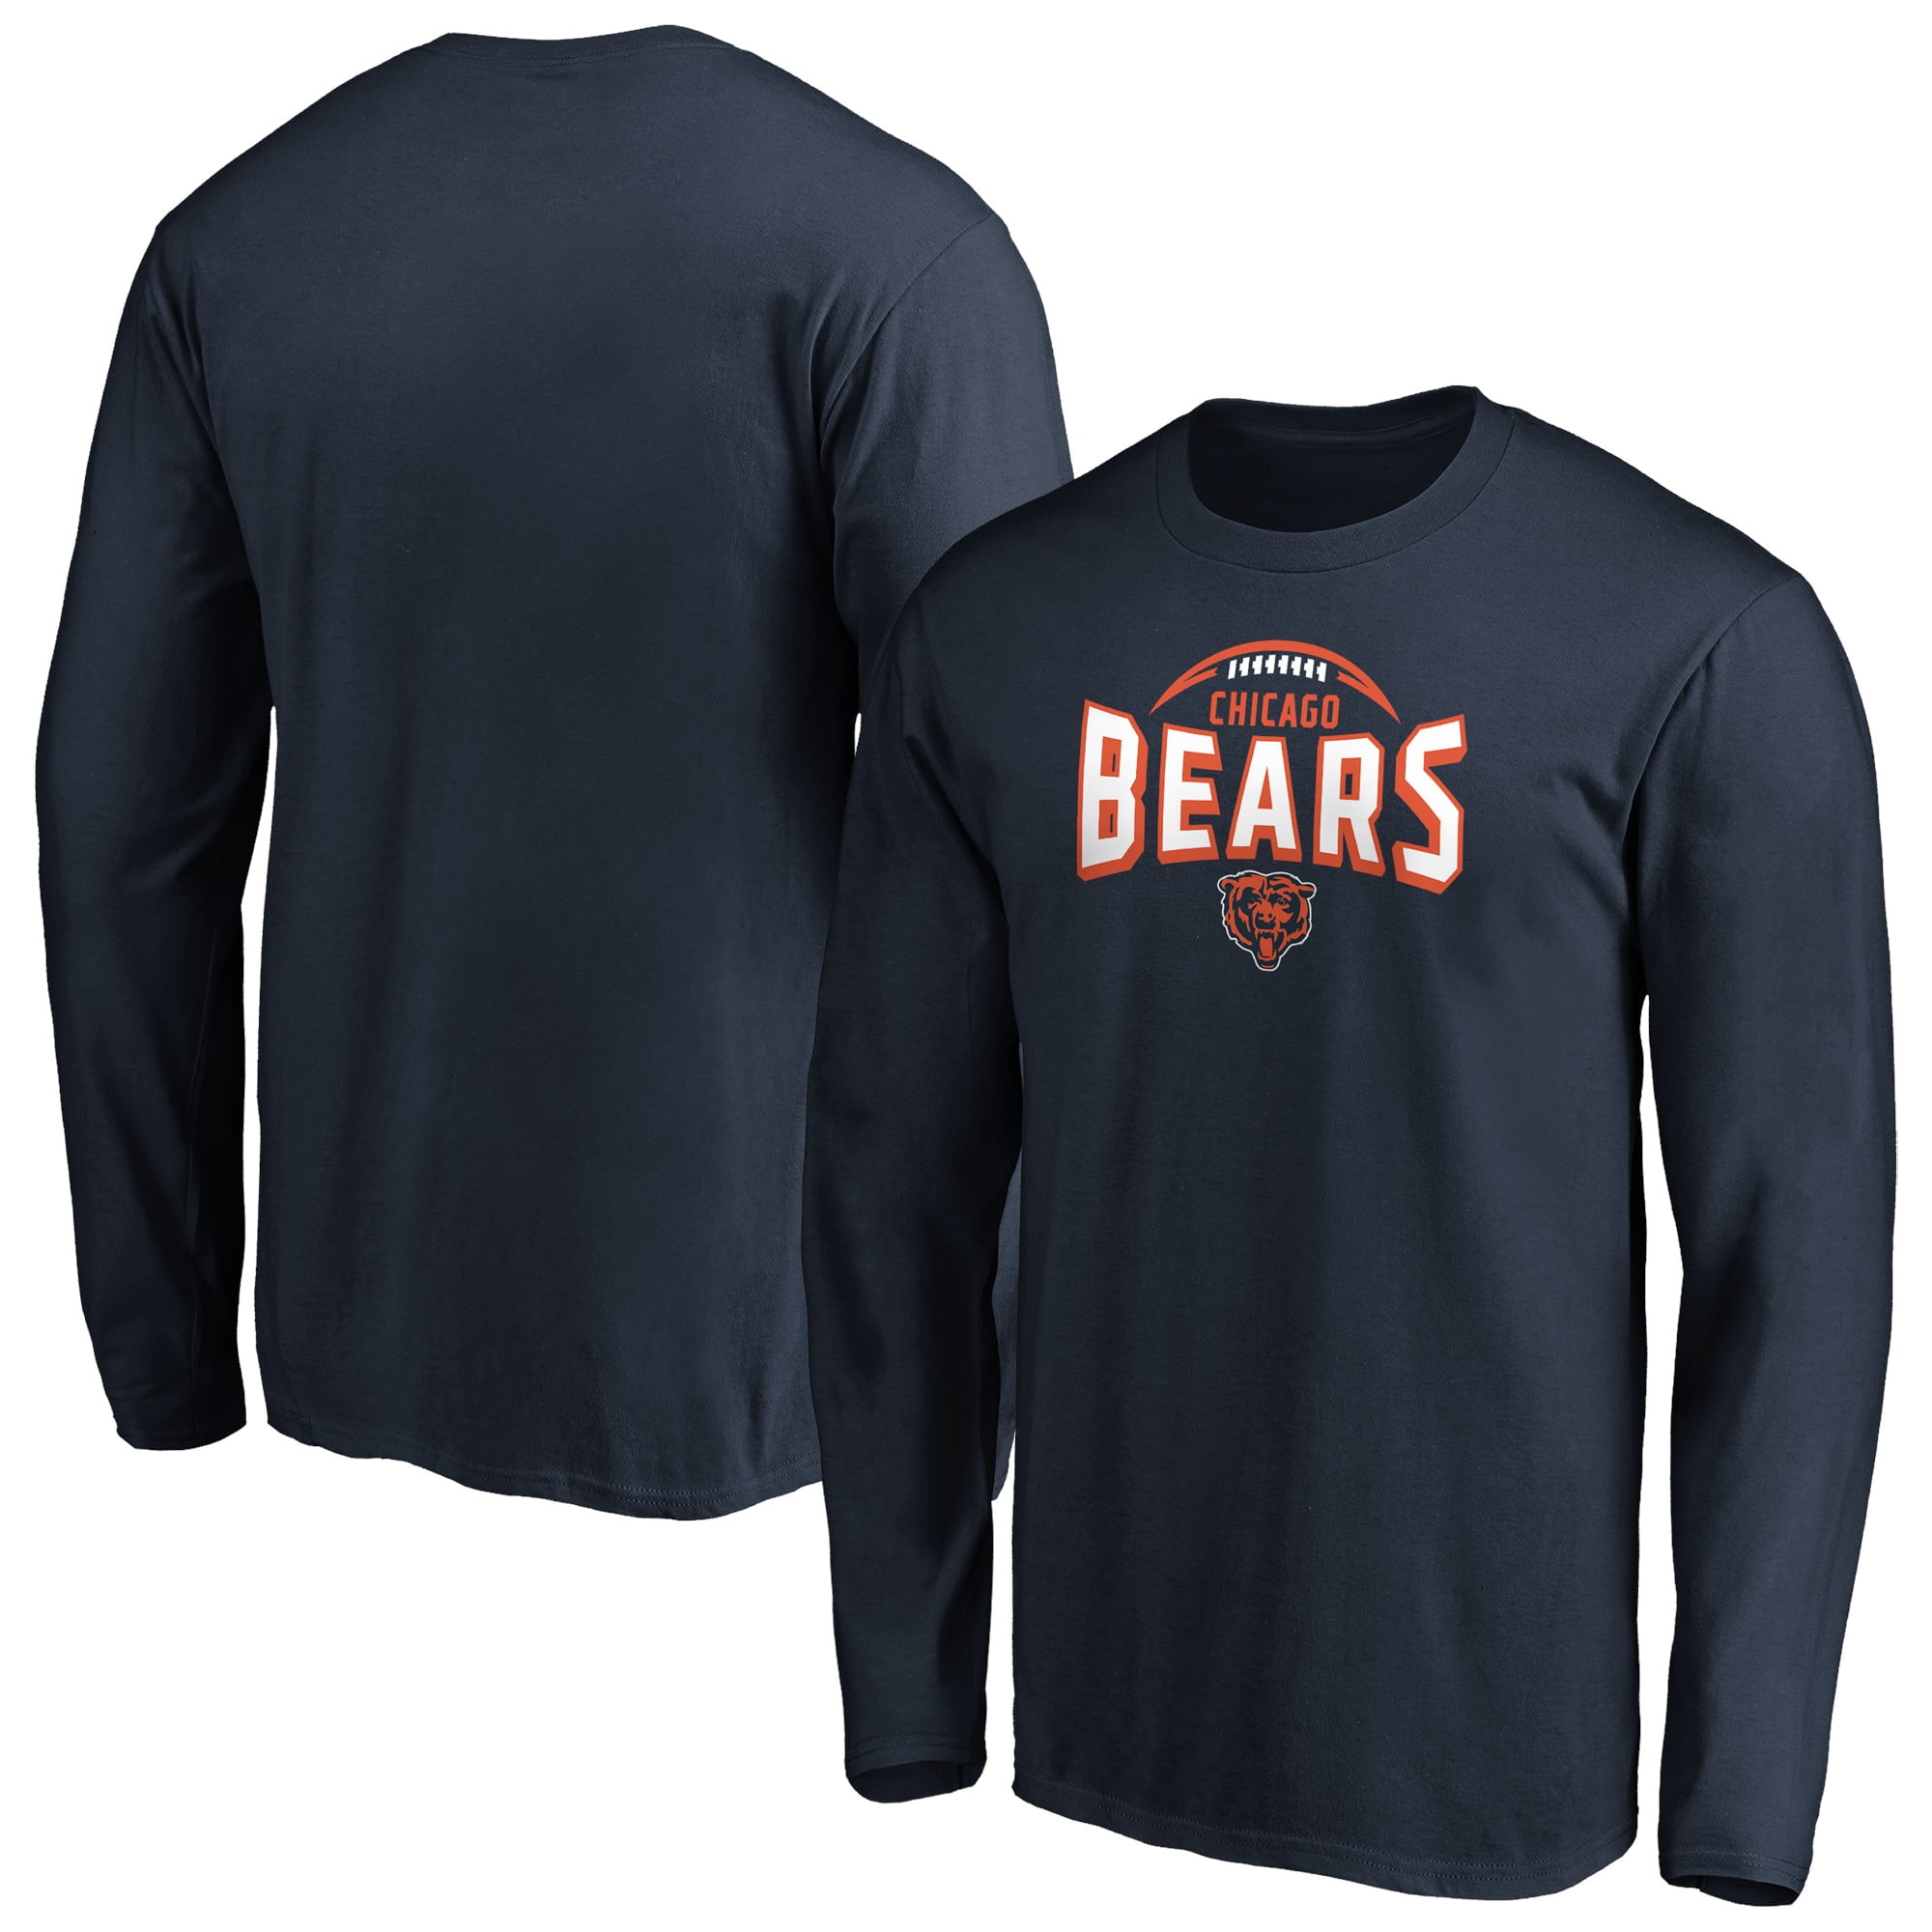 Chicago Bears T-Shirts - Walmart.com